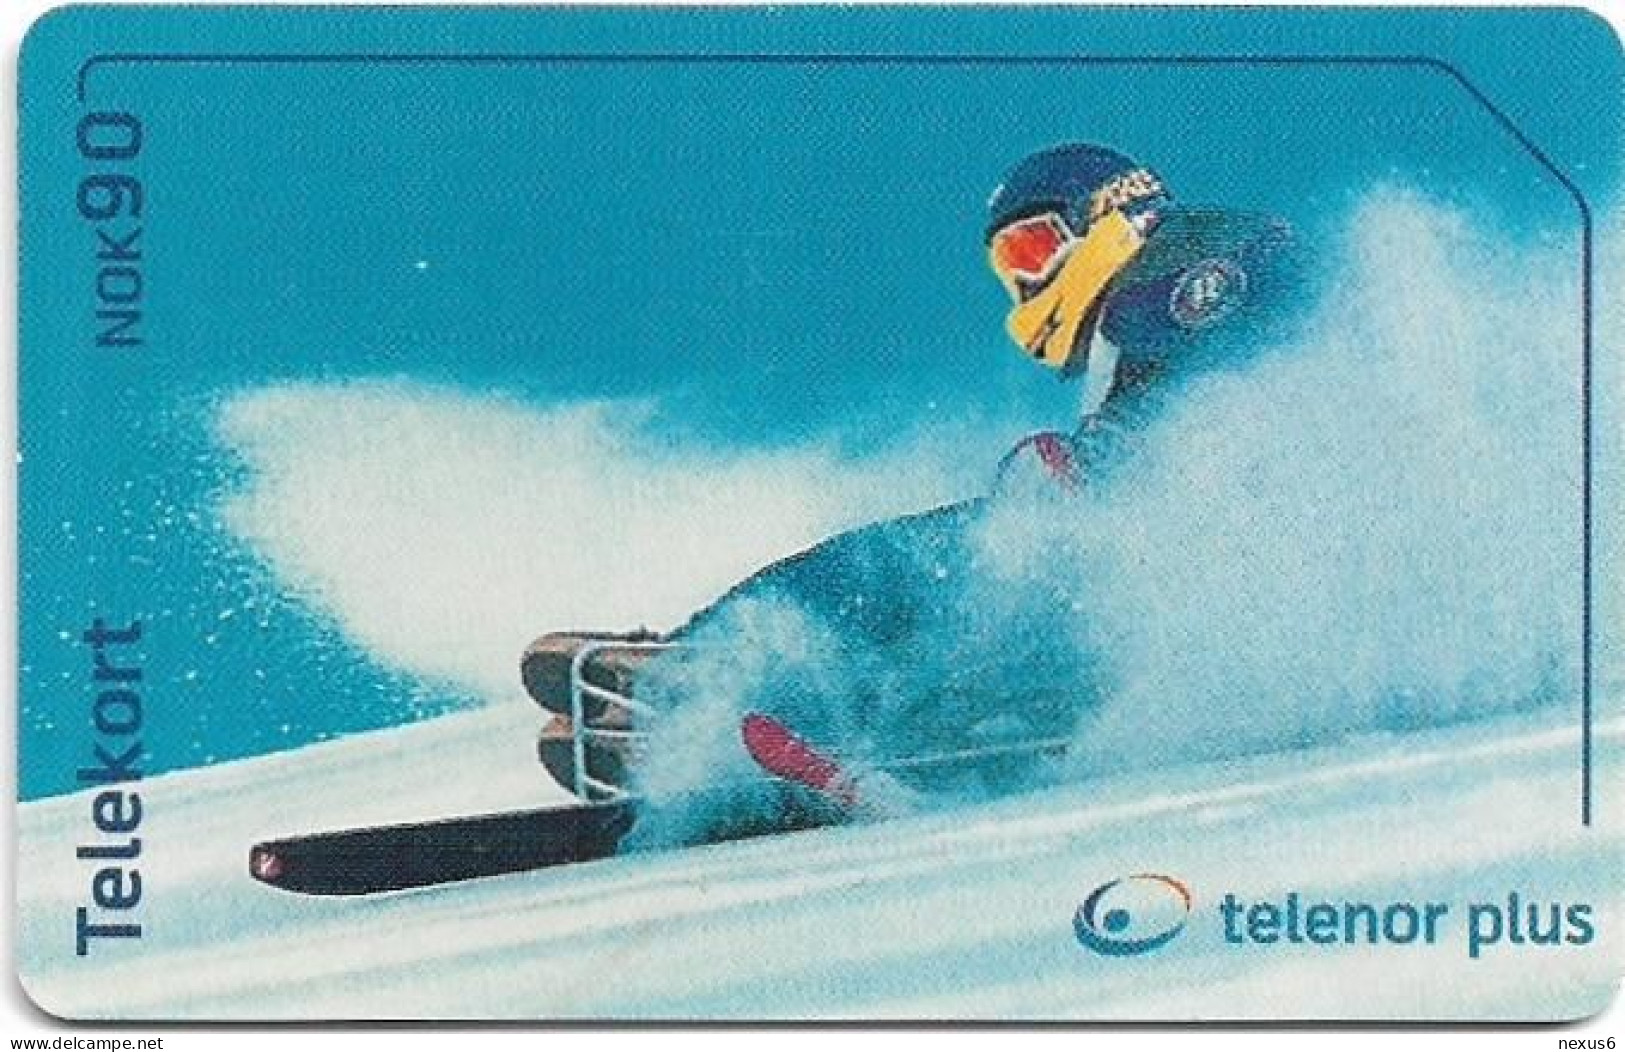 Norway - Telenor - Alpint Snow Ski - N-238 (Cn. 23030 001D6), SC7, 03.2002, 20.000ex, Used - Noorwegen